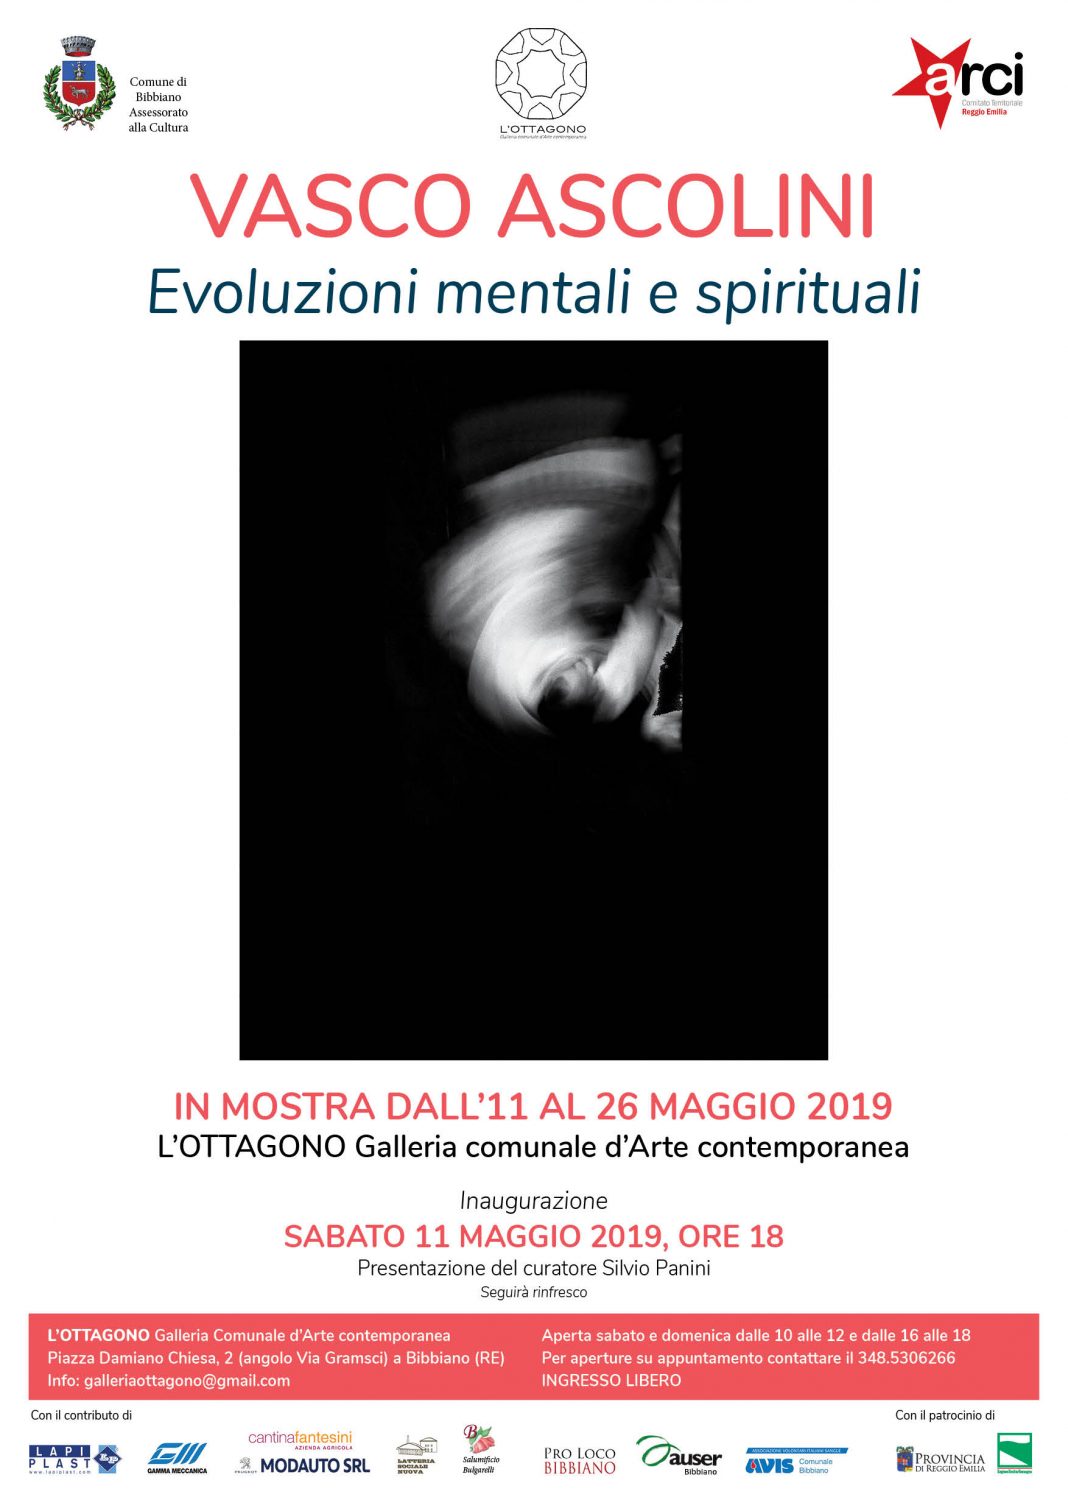 Vasco Ascolini – Evoluzioni mentali e spiritualihttps://www.exibart.com/repository/media/eventi/2019/05/vasco-ascolini-8211-evoluzioni-mentali-e-spirituali-1068x1511.jpg